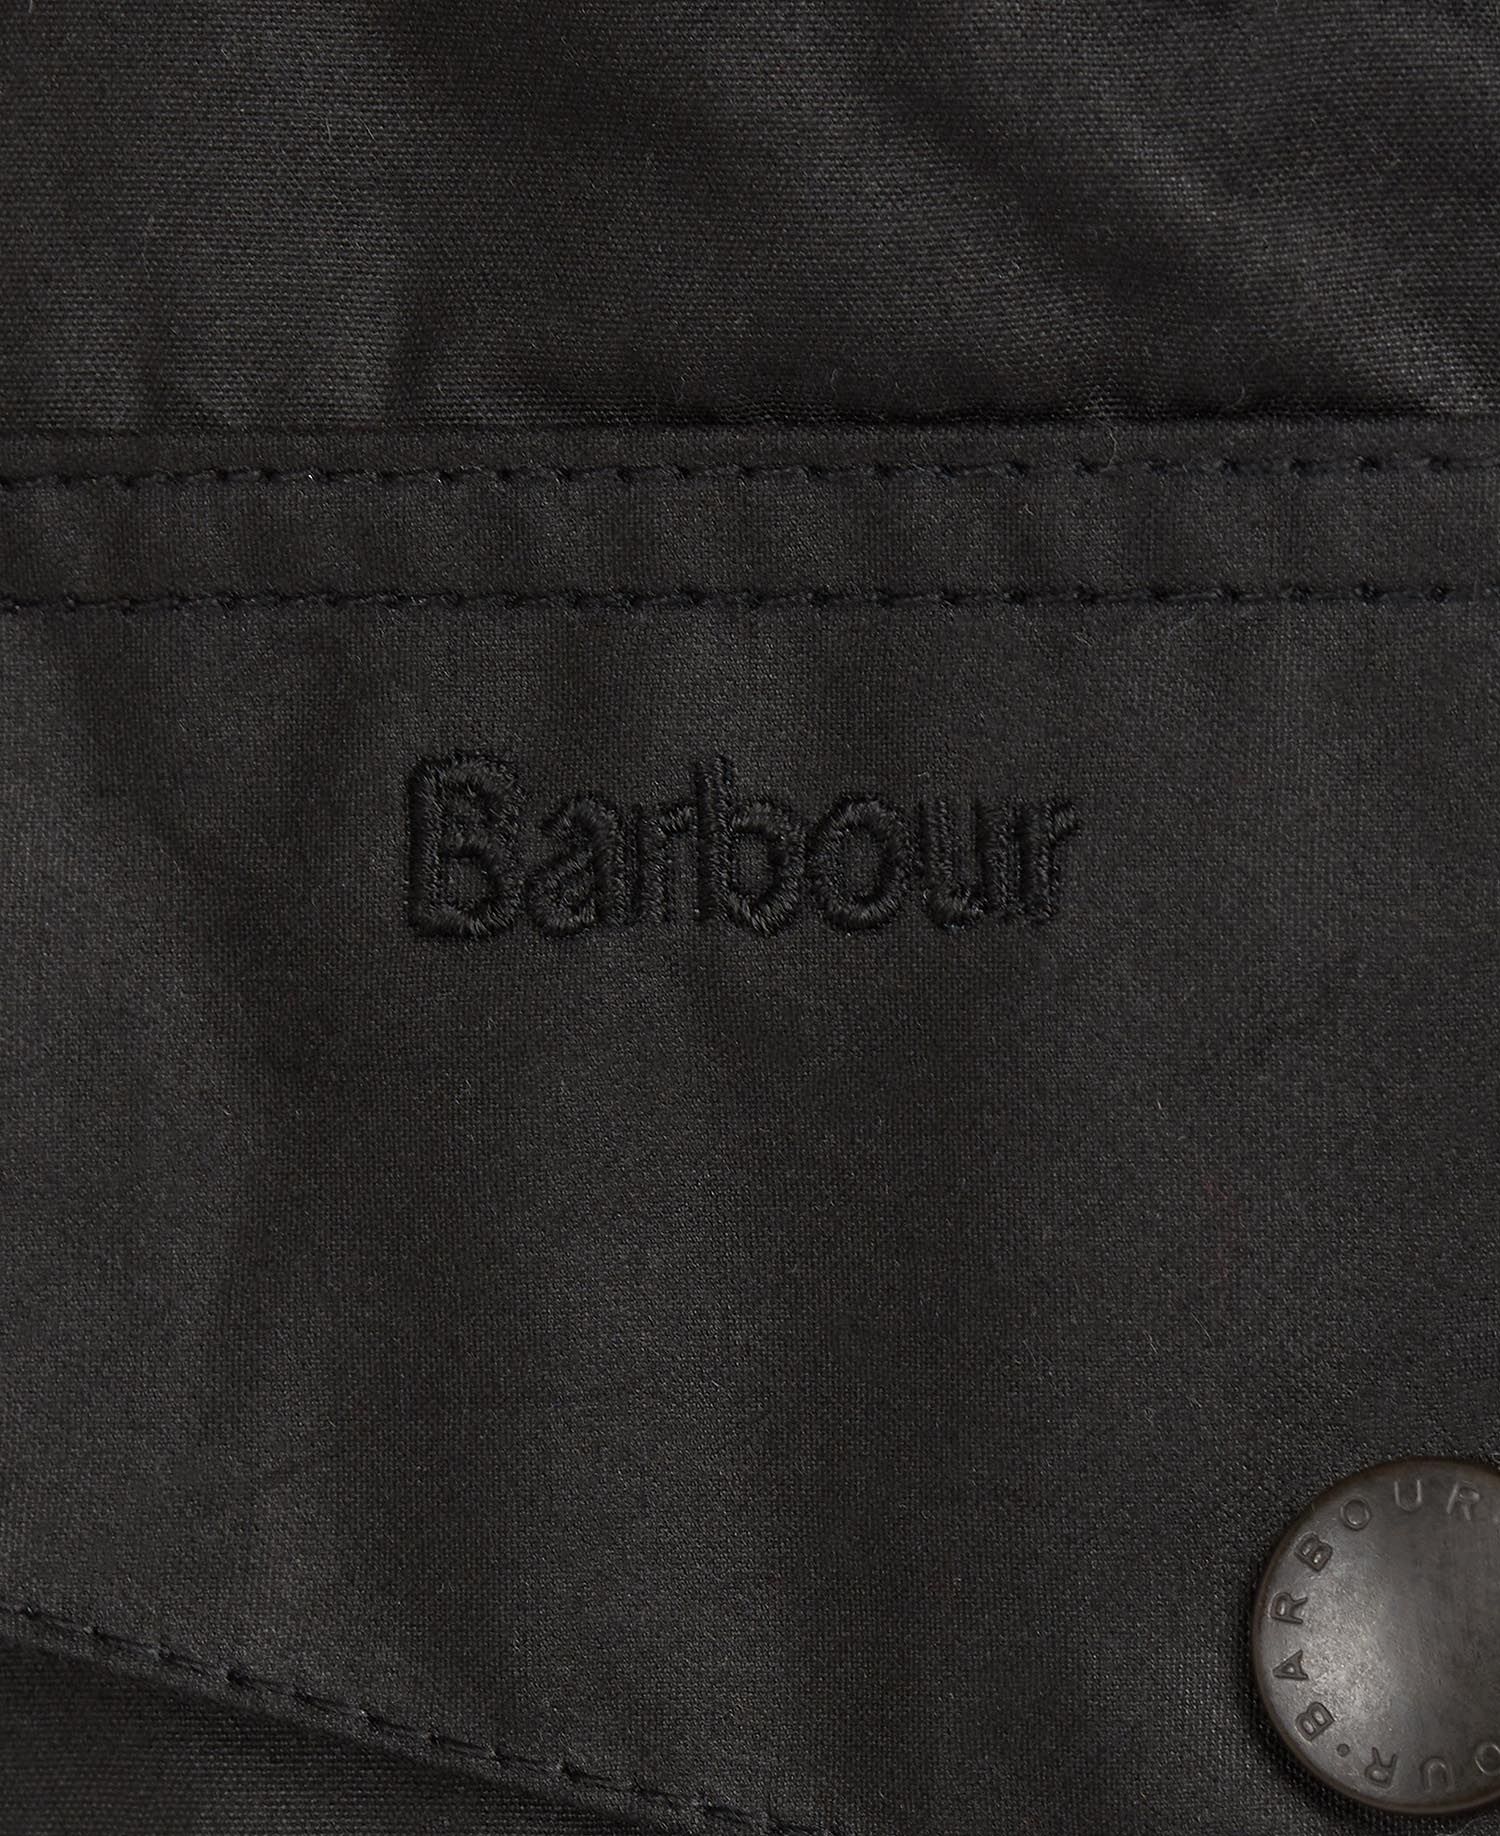 Barbour Sapper Wax Jacket in Black | Barbour